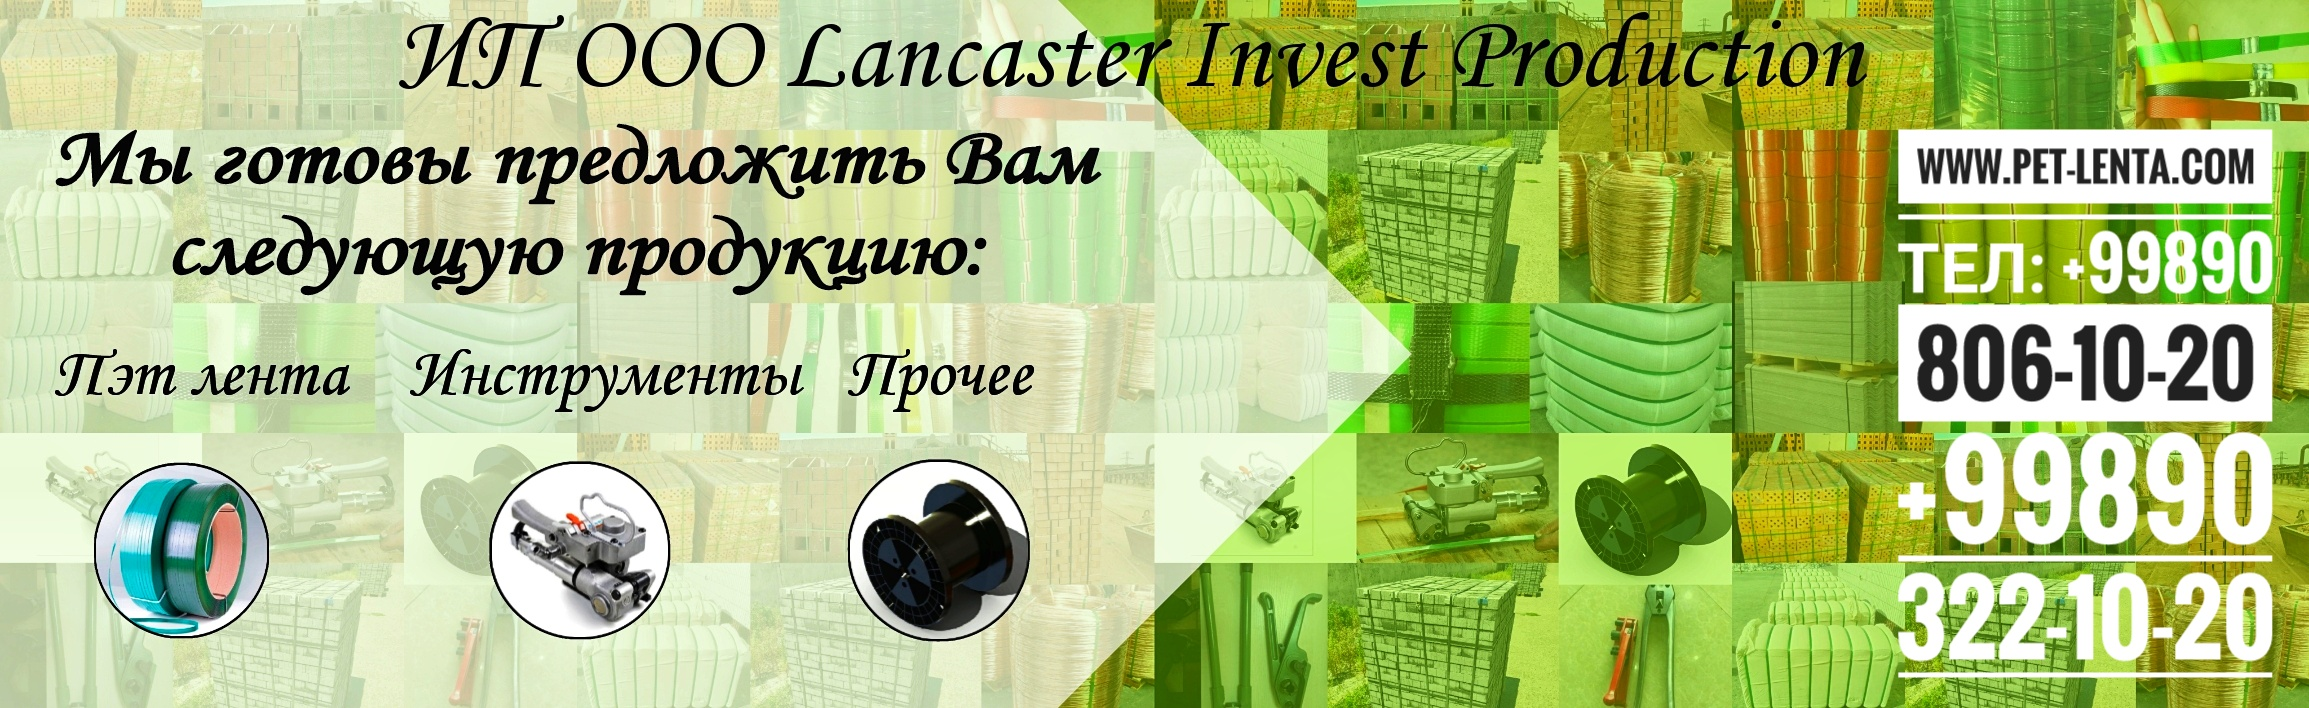 Lancaster Invest Production